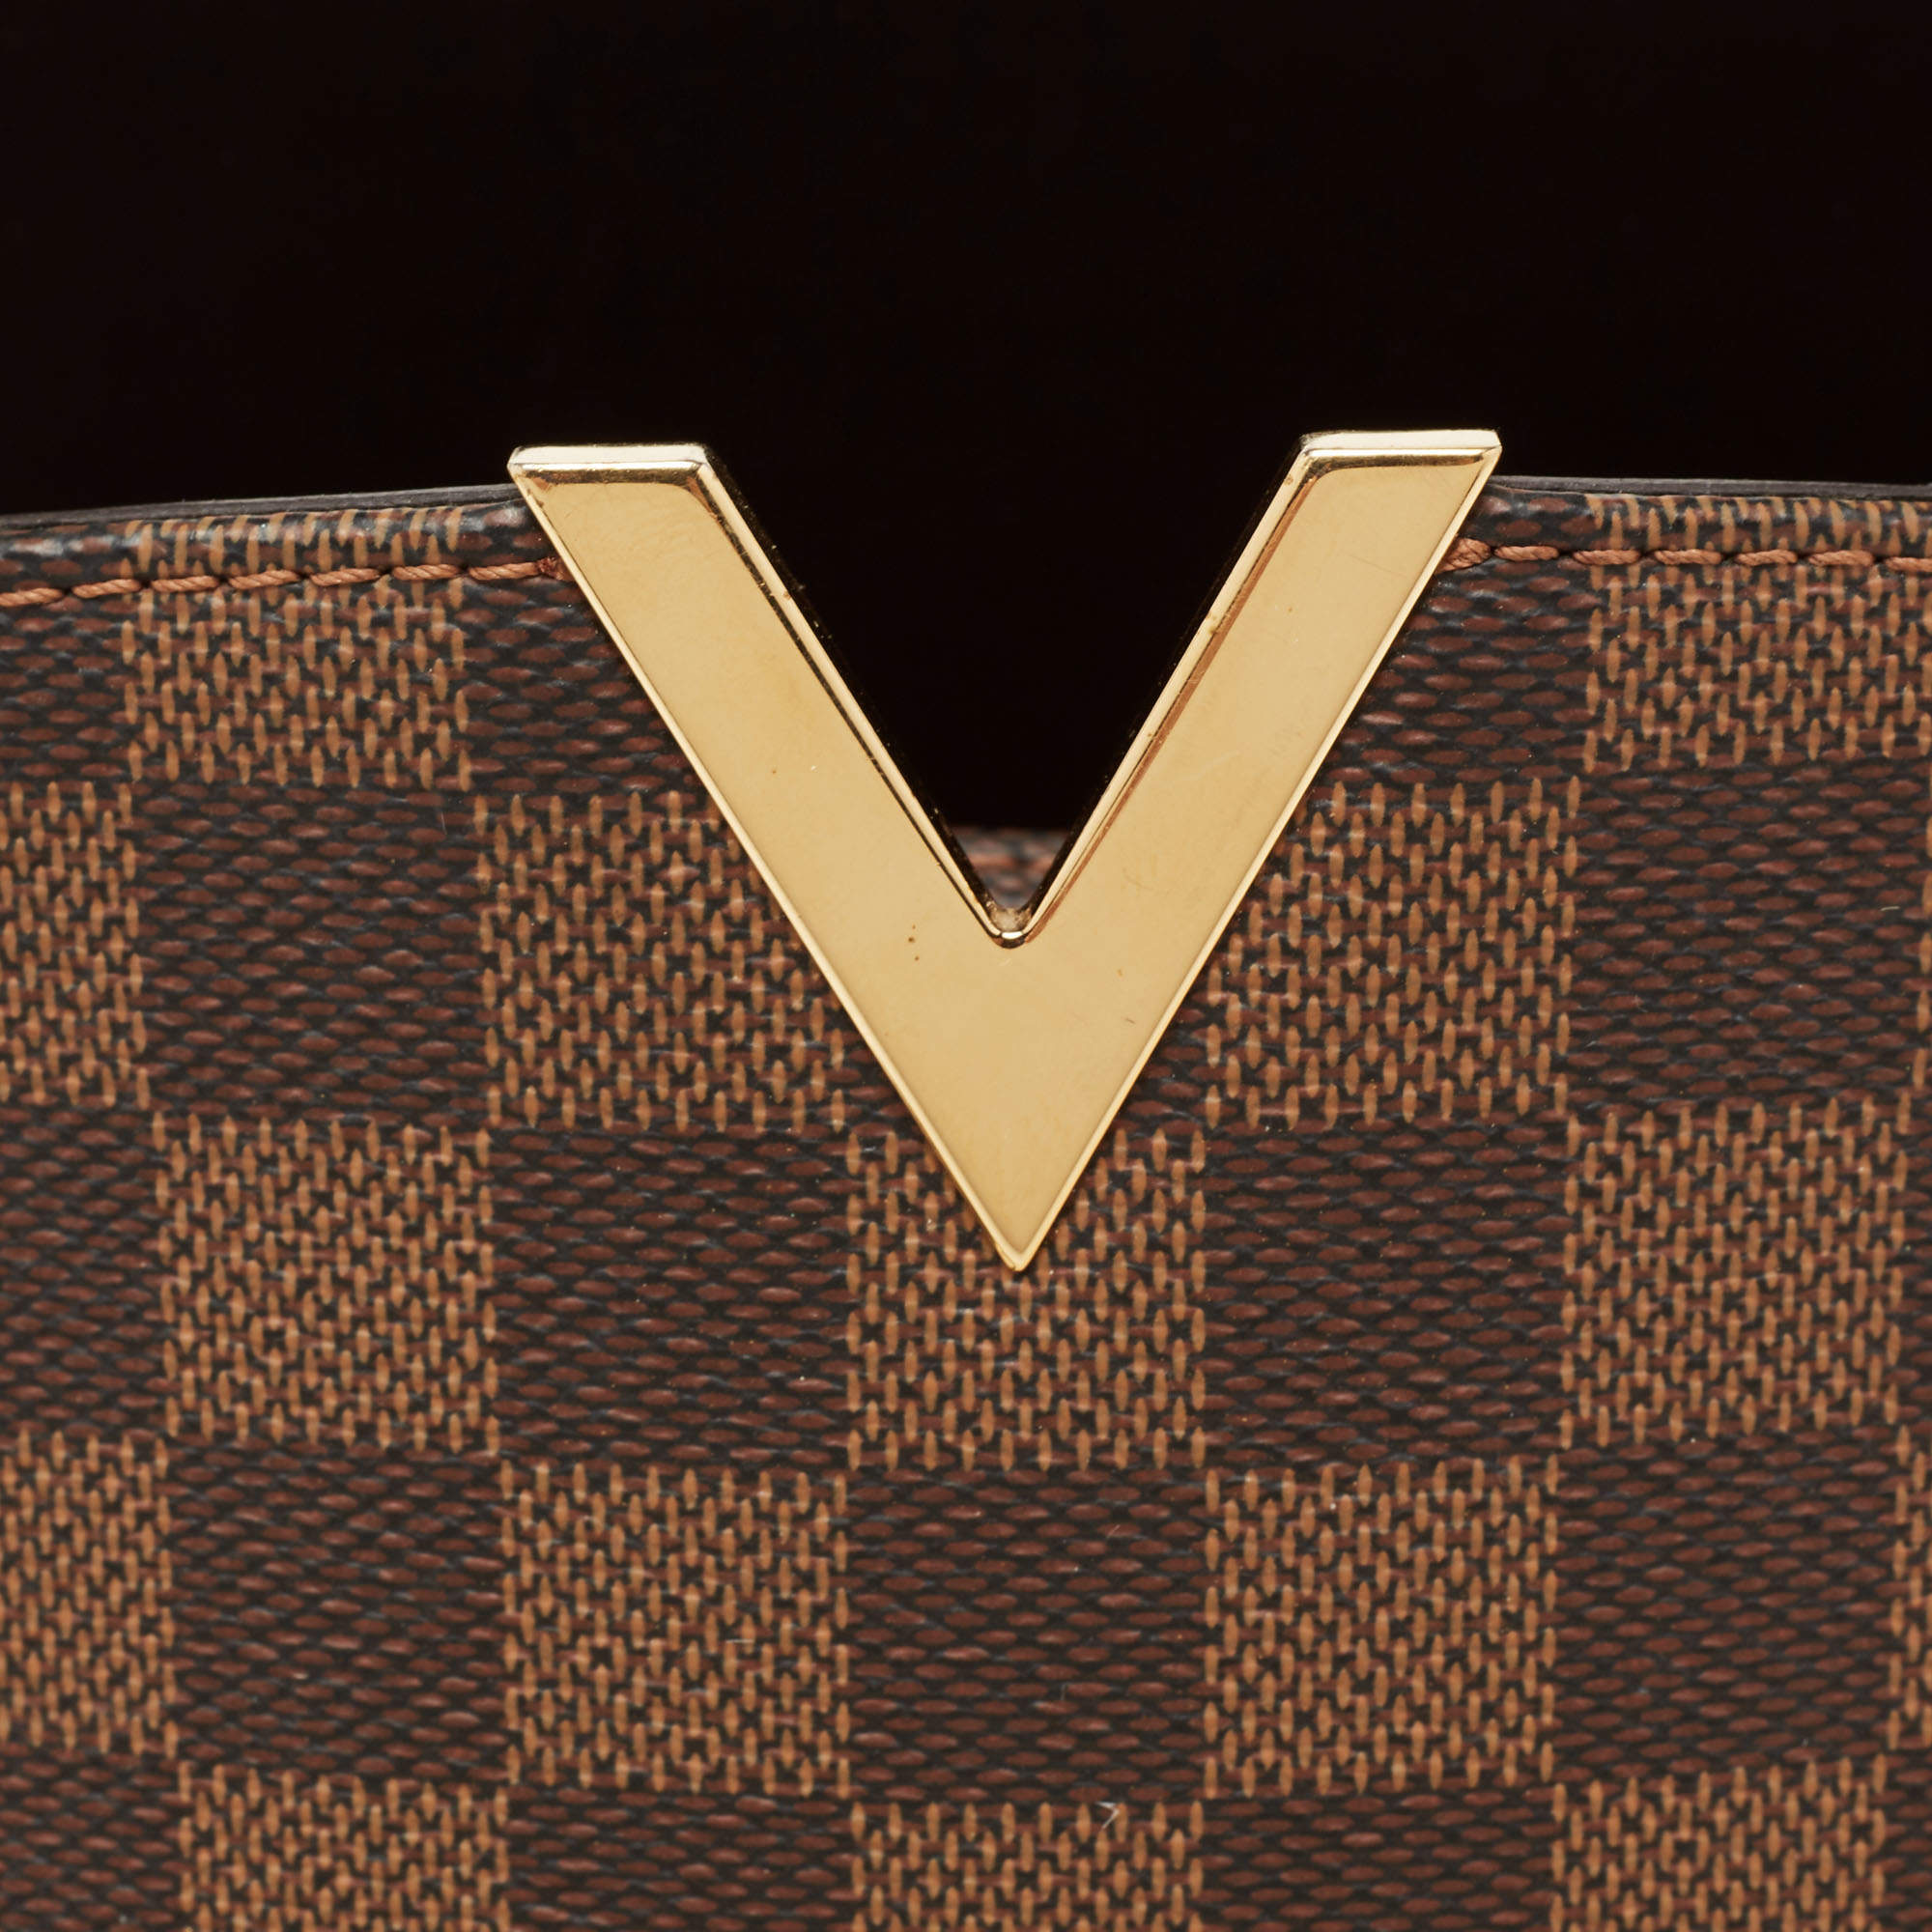 Louis Vuitton Kensington Bowling Bag Damier Ebene - THE PURSE AFFAIR